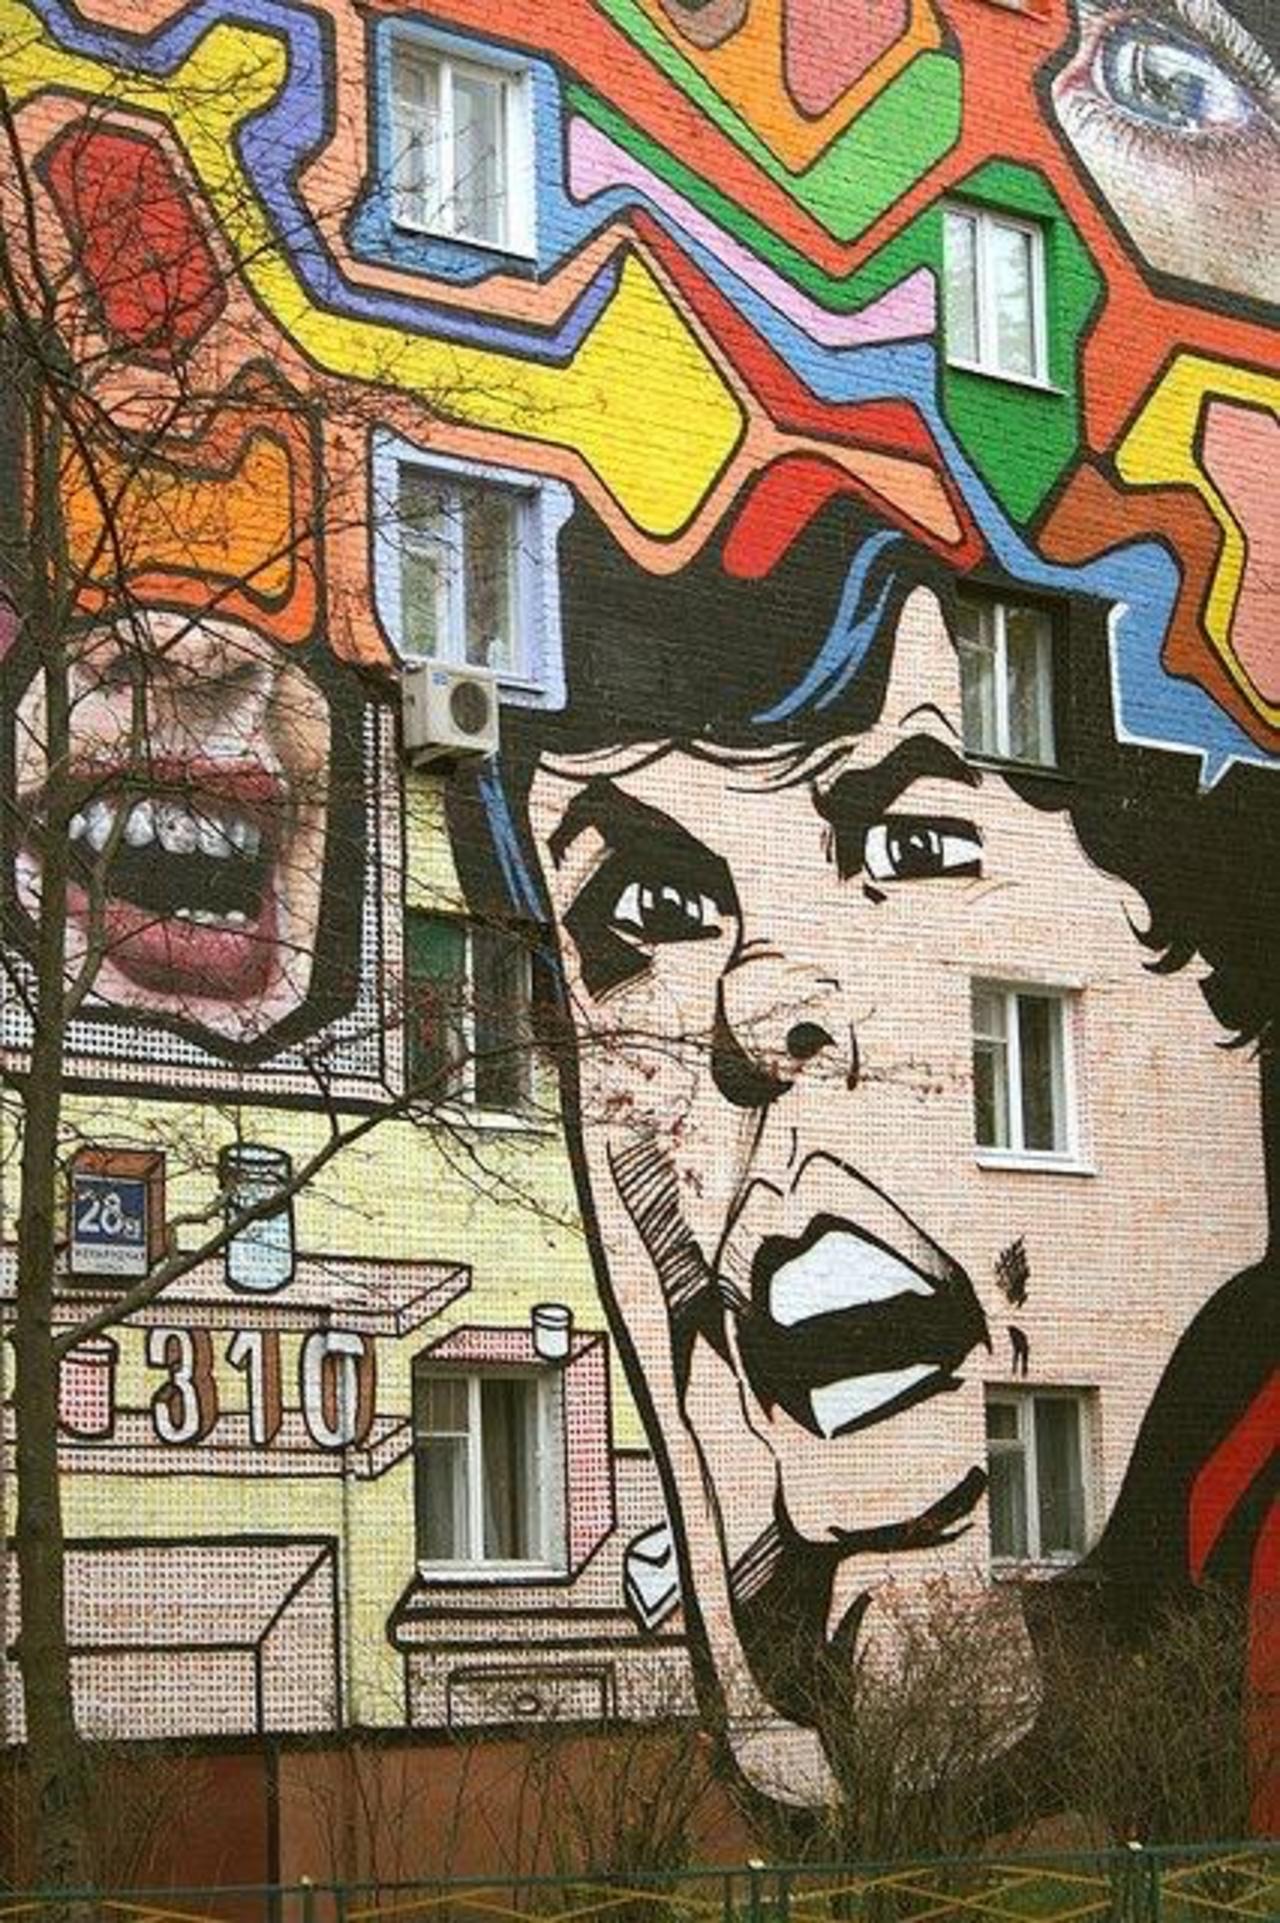 RT @Pitchuskita: Stepan krasnov
Moscow
#streetart #art #graffiti #mural http://t.co/8FinxMTJ0A